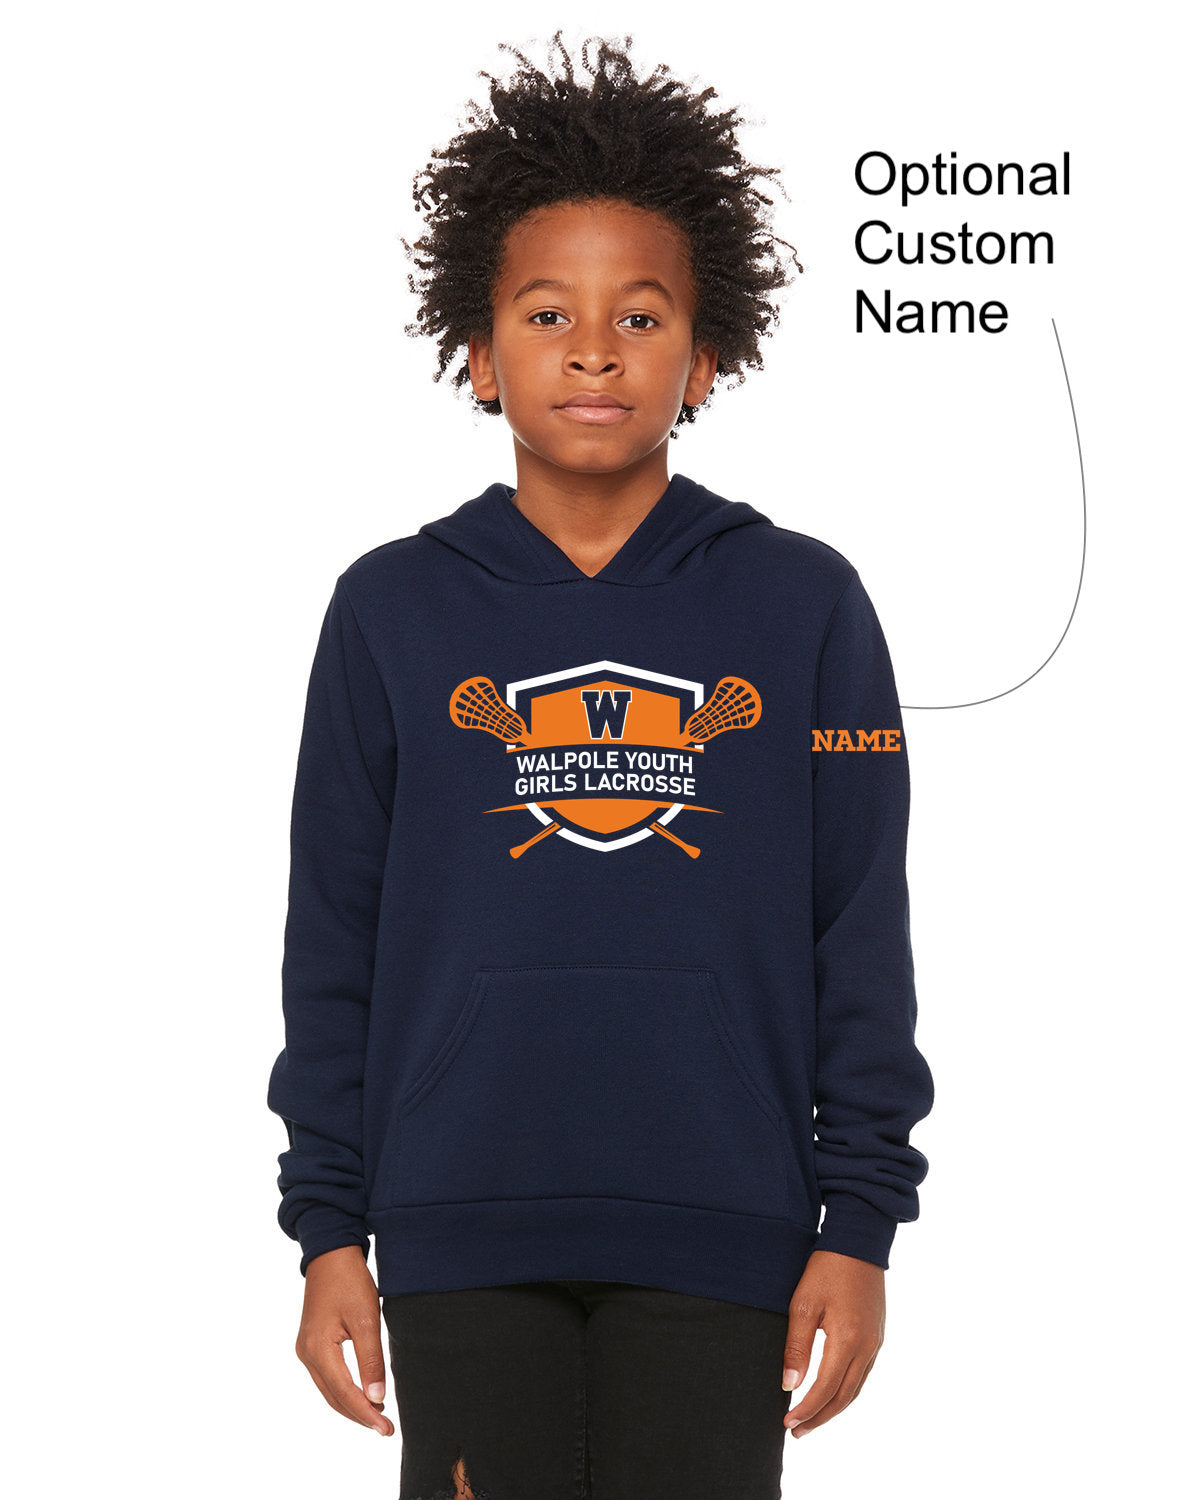 Walpole Youth Girls Lacrosse - Essential Fleece Pullover Hooded Sweatshirt (Youth - 3719Y)